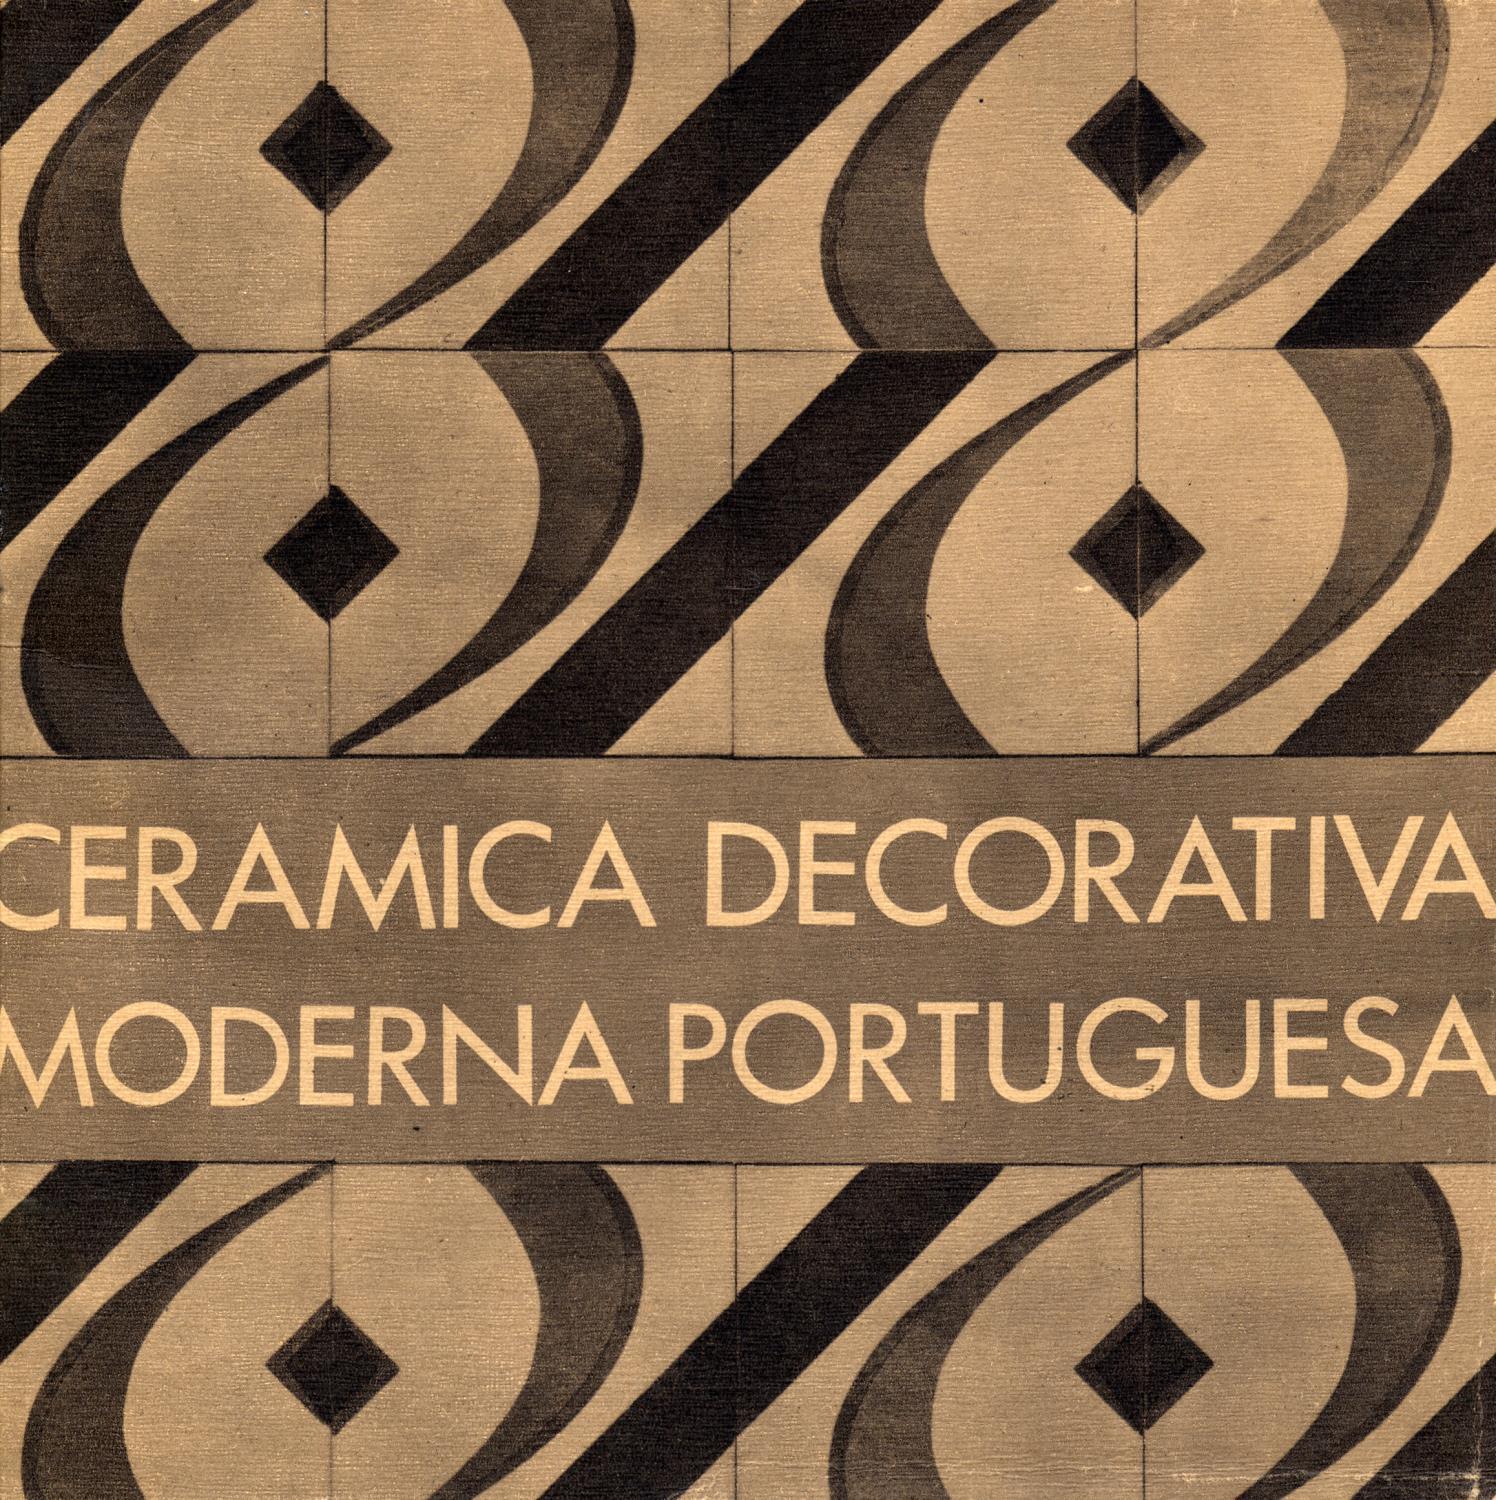 Cerâmica Decorativa Moderna Portuguesa